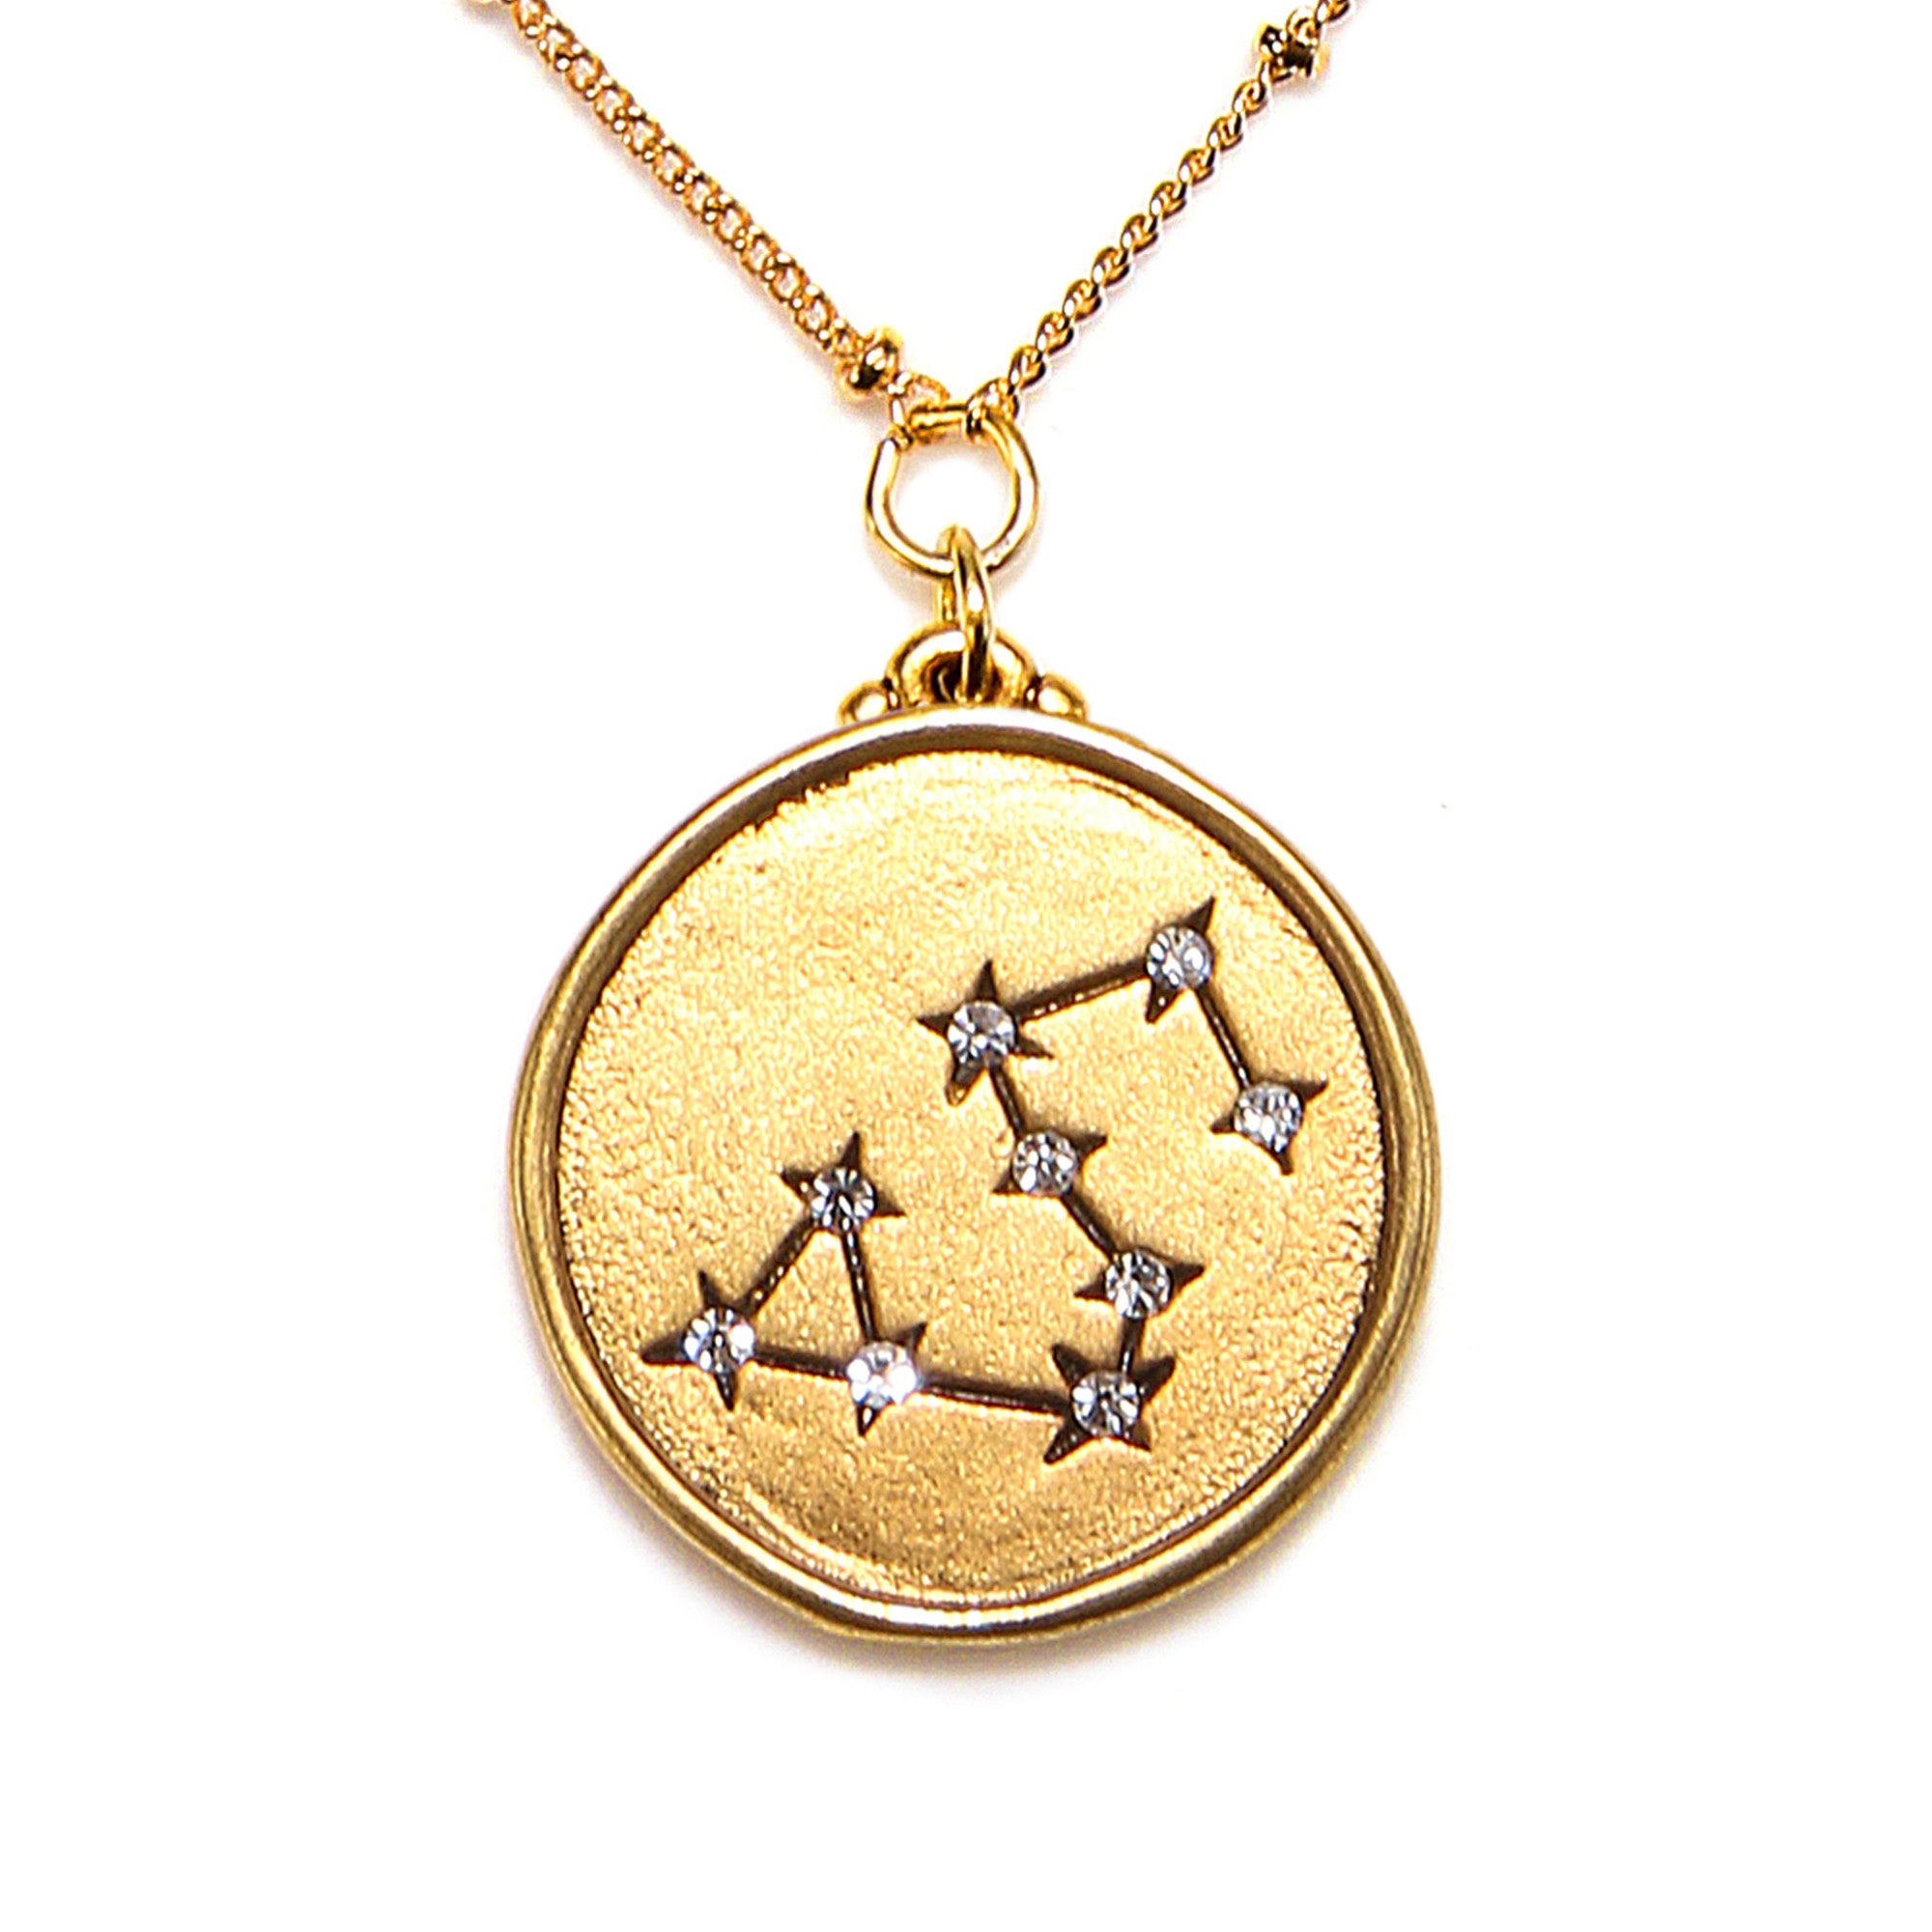 Leo Constellation Necklace – The Spiritual Planet